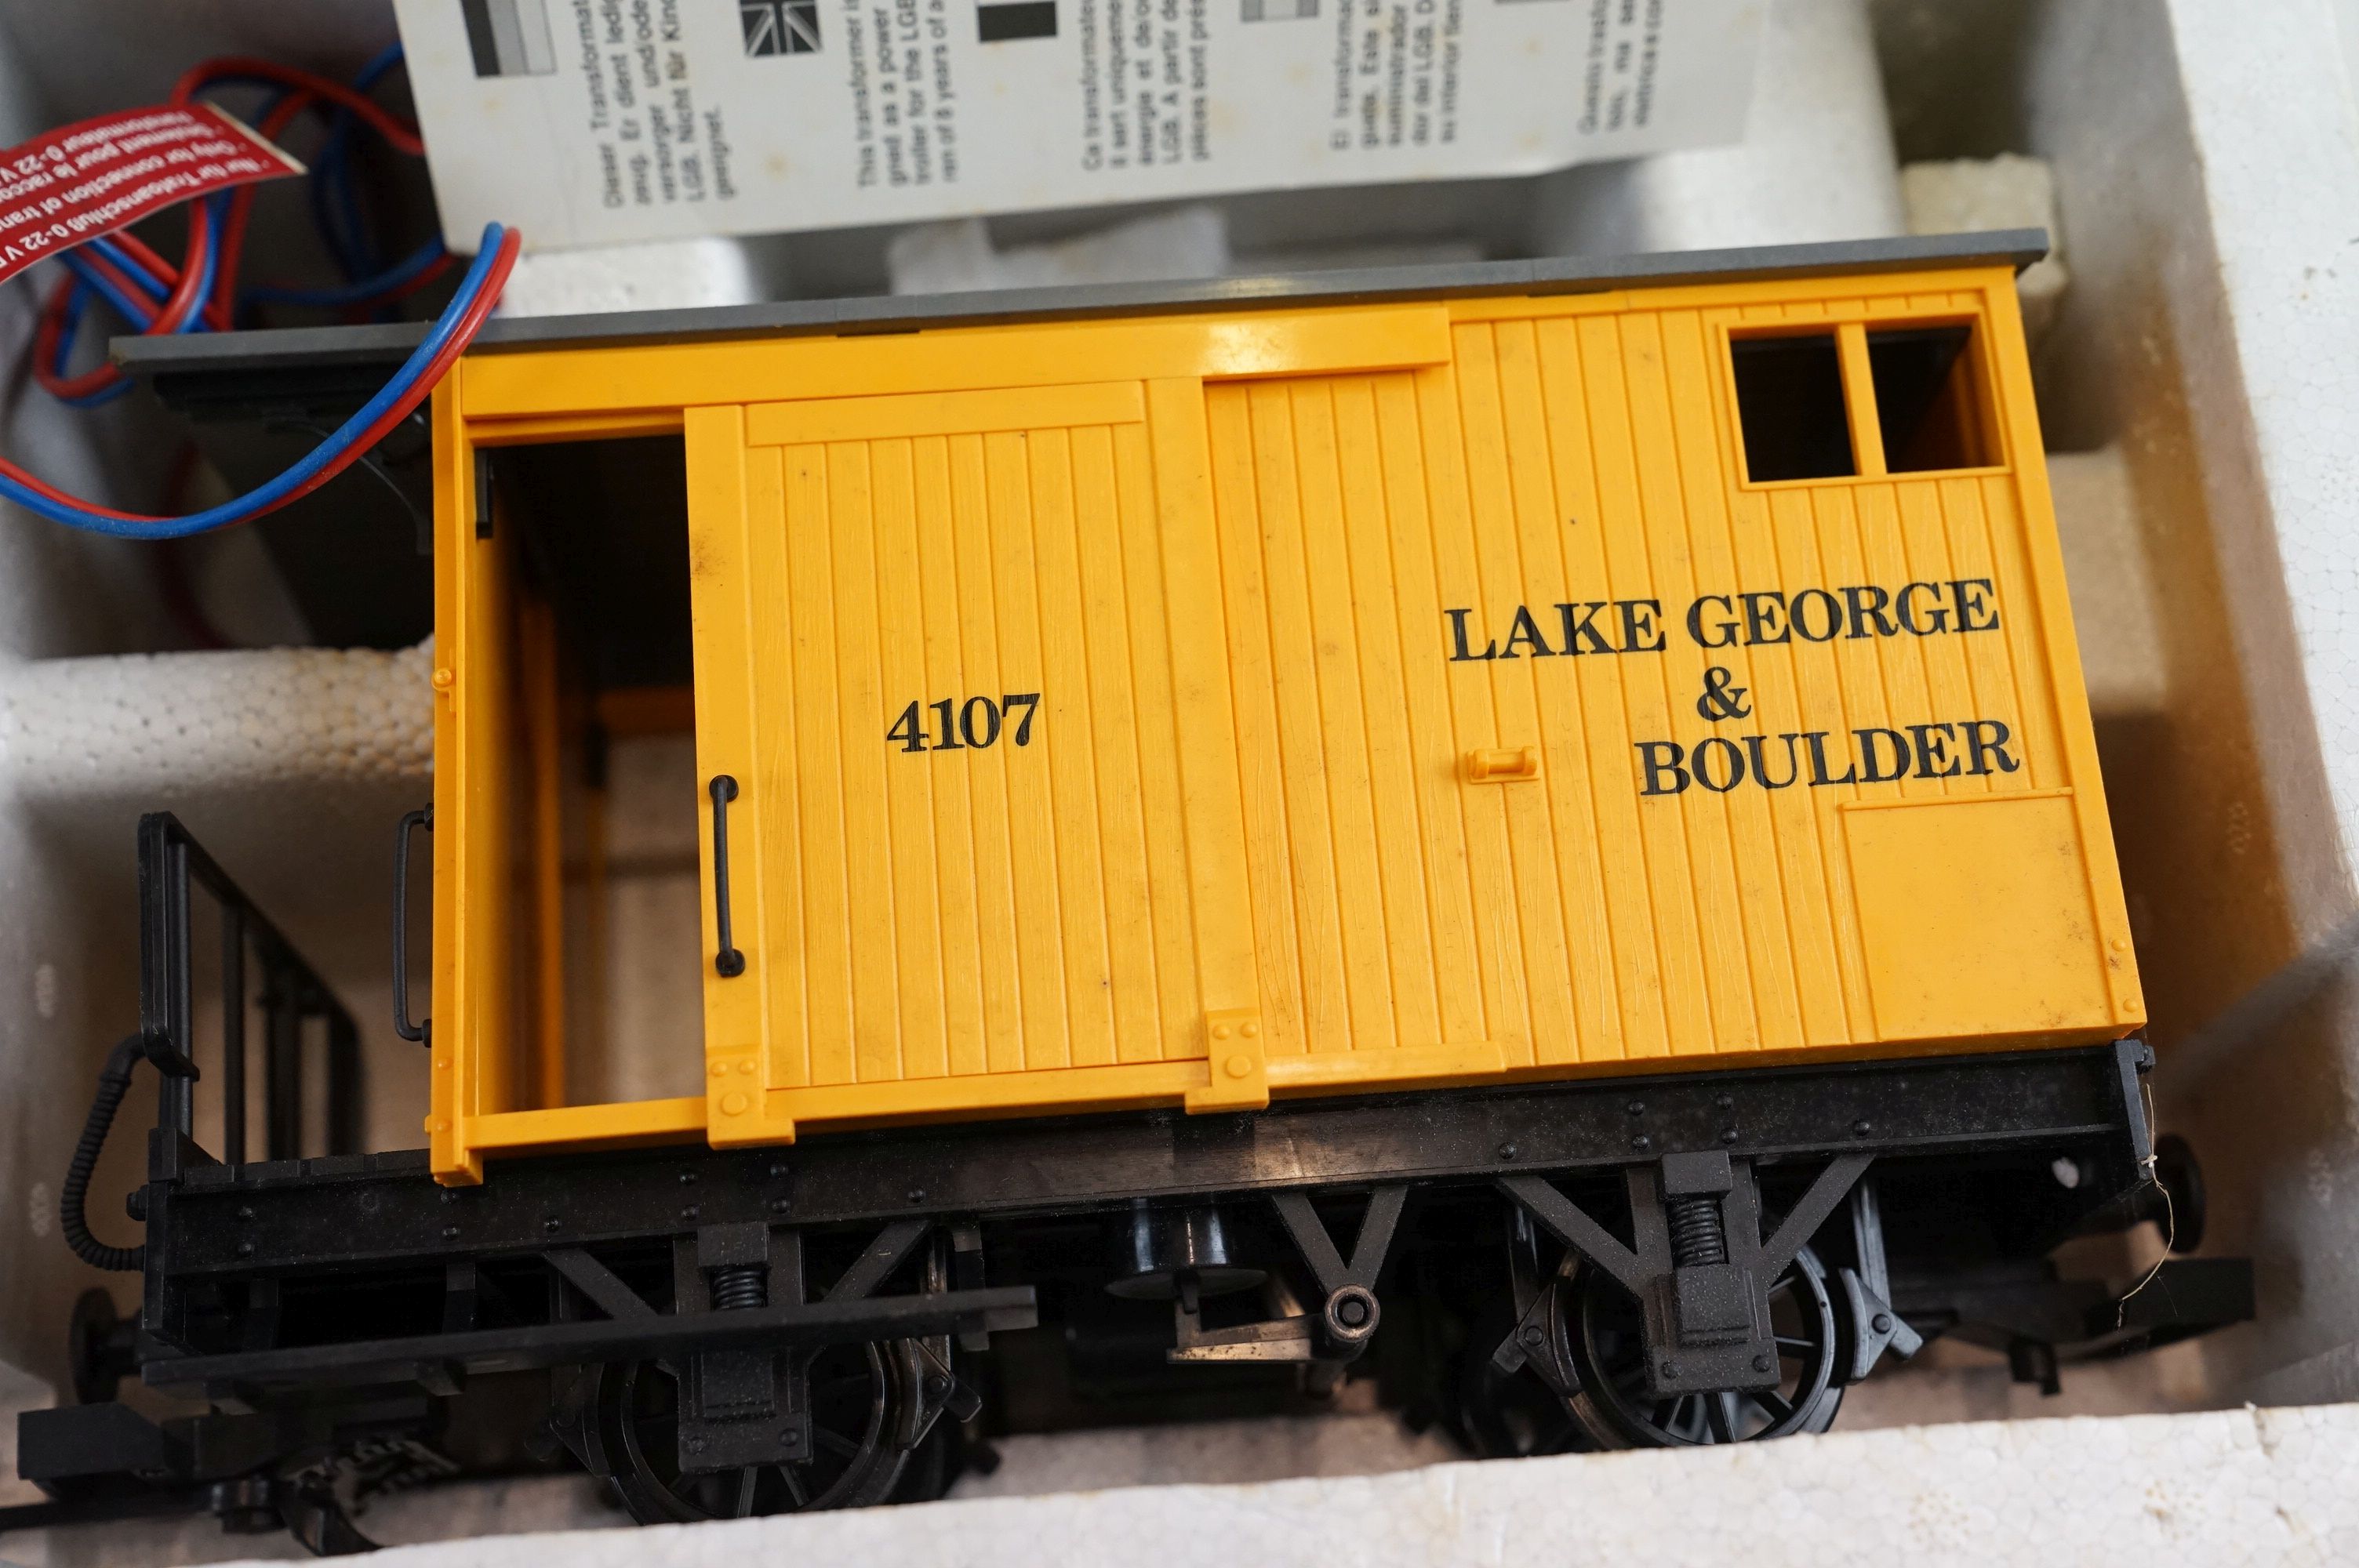 Boxed Lehmann LGB 90770 'The Big Train' Fantasy Lake George & Boulder train set with 0-4-0 - Image 6 of 12